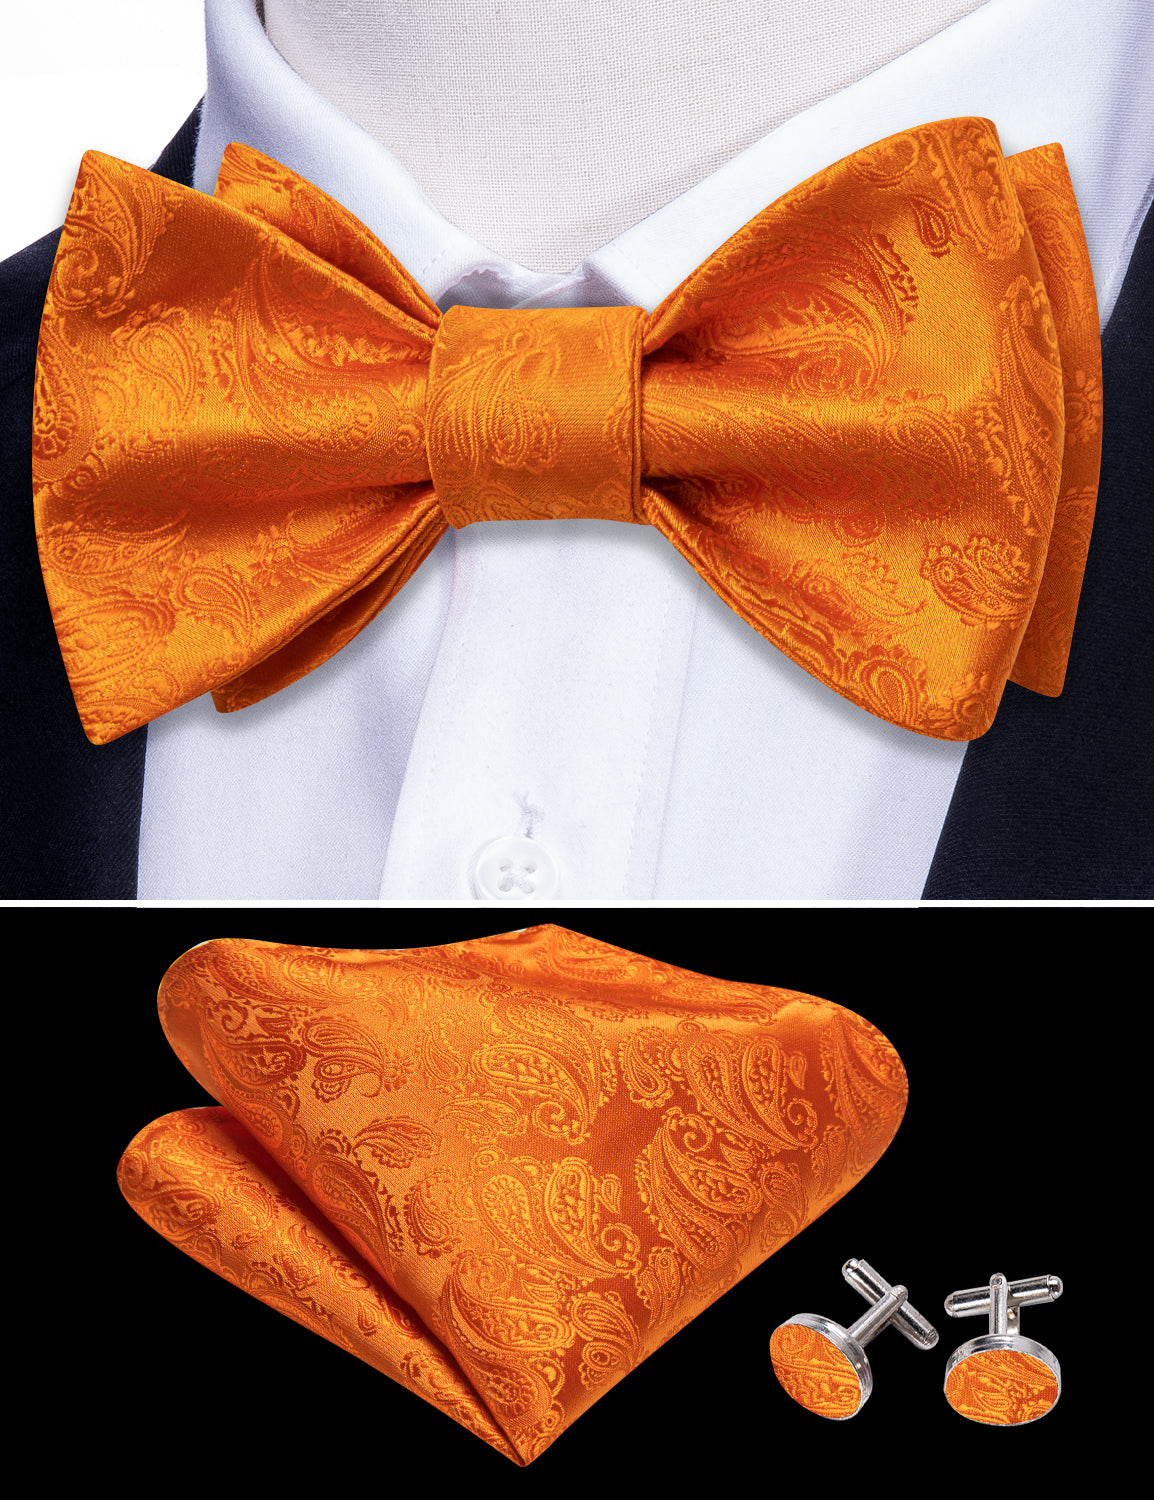 Barry.wang Orange Tie Paisley Silk Men's Bow Tie Hanky Cufflinks Set